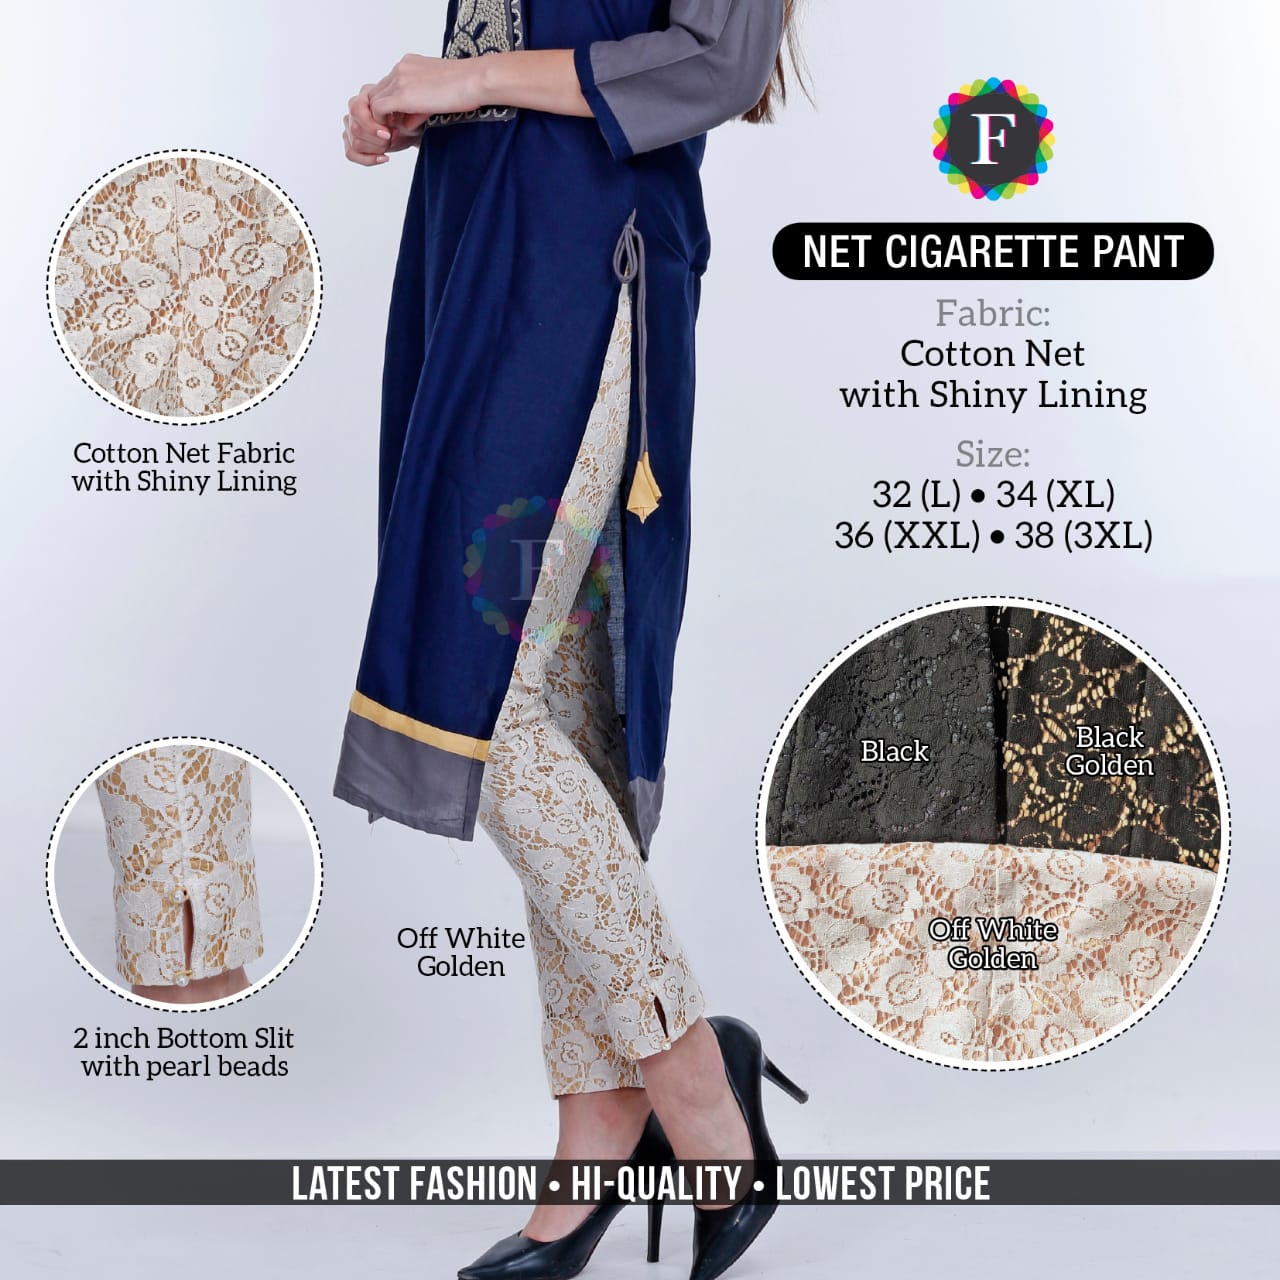 Net Cigarette Pant Ethnic Fancy Bottom Wear Collection Supplier In Surat